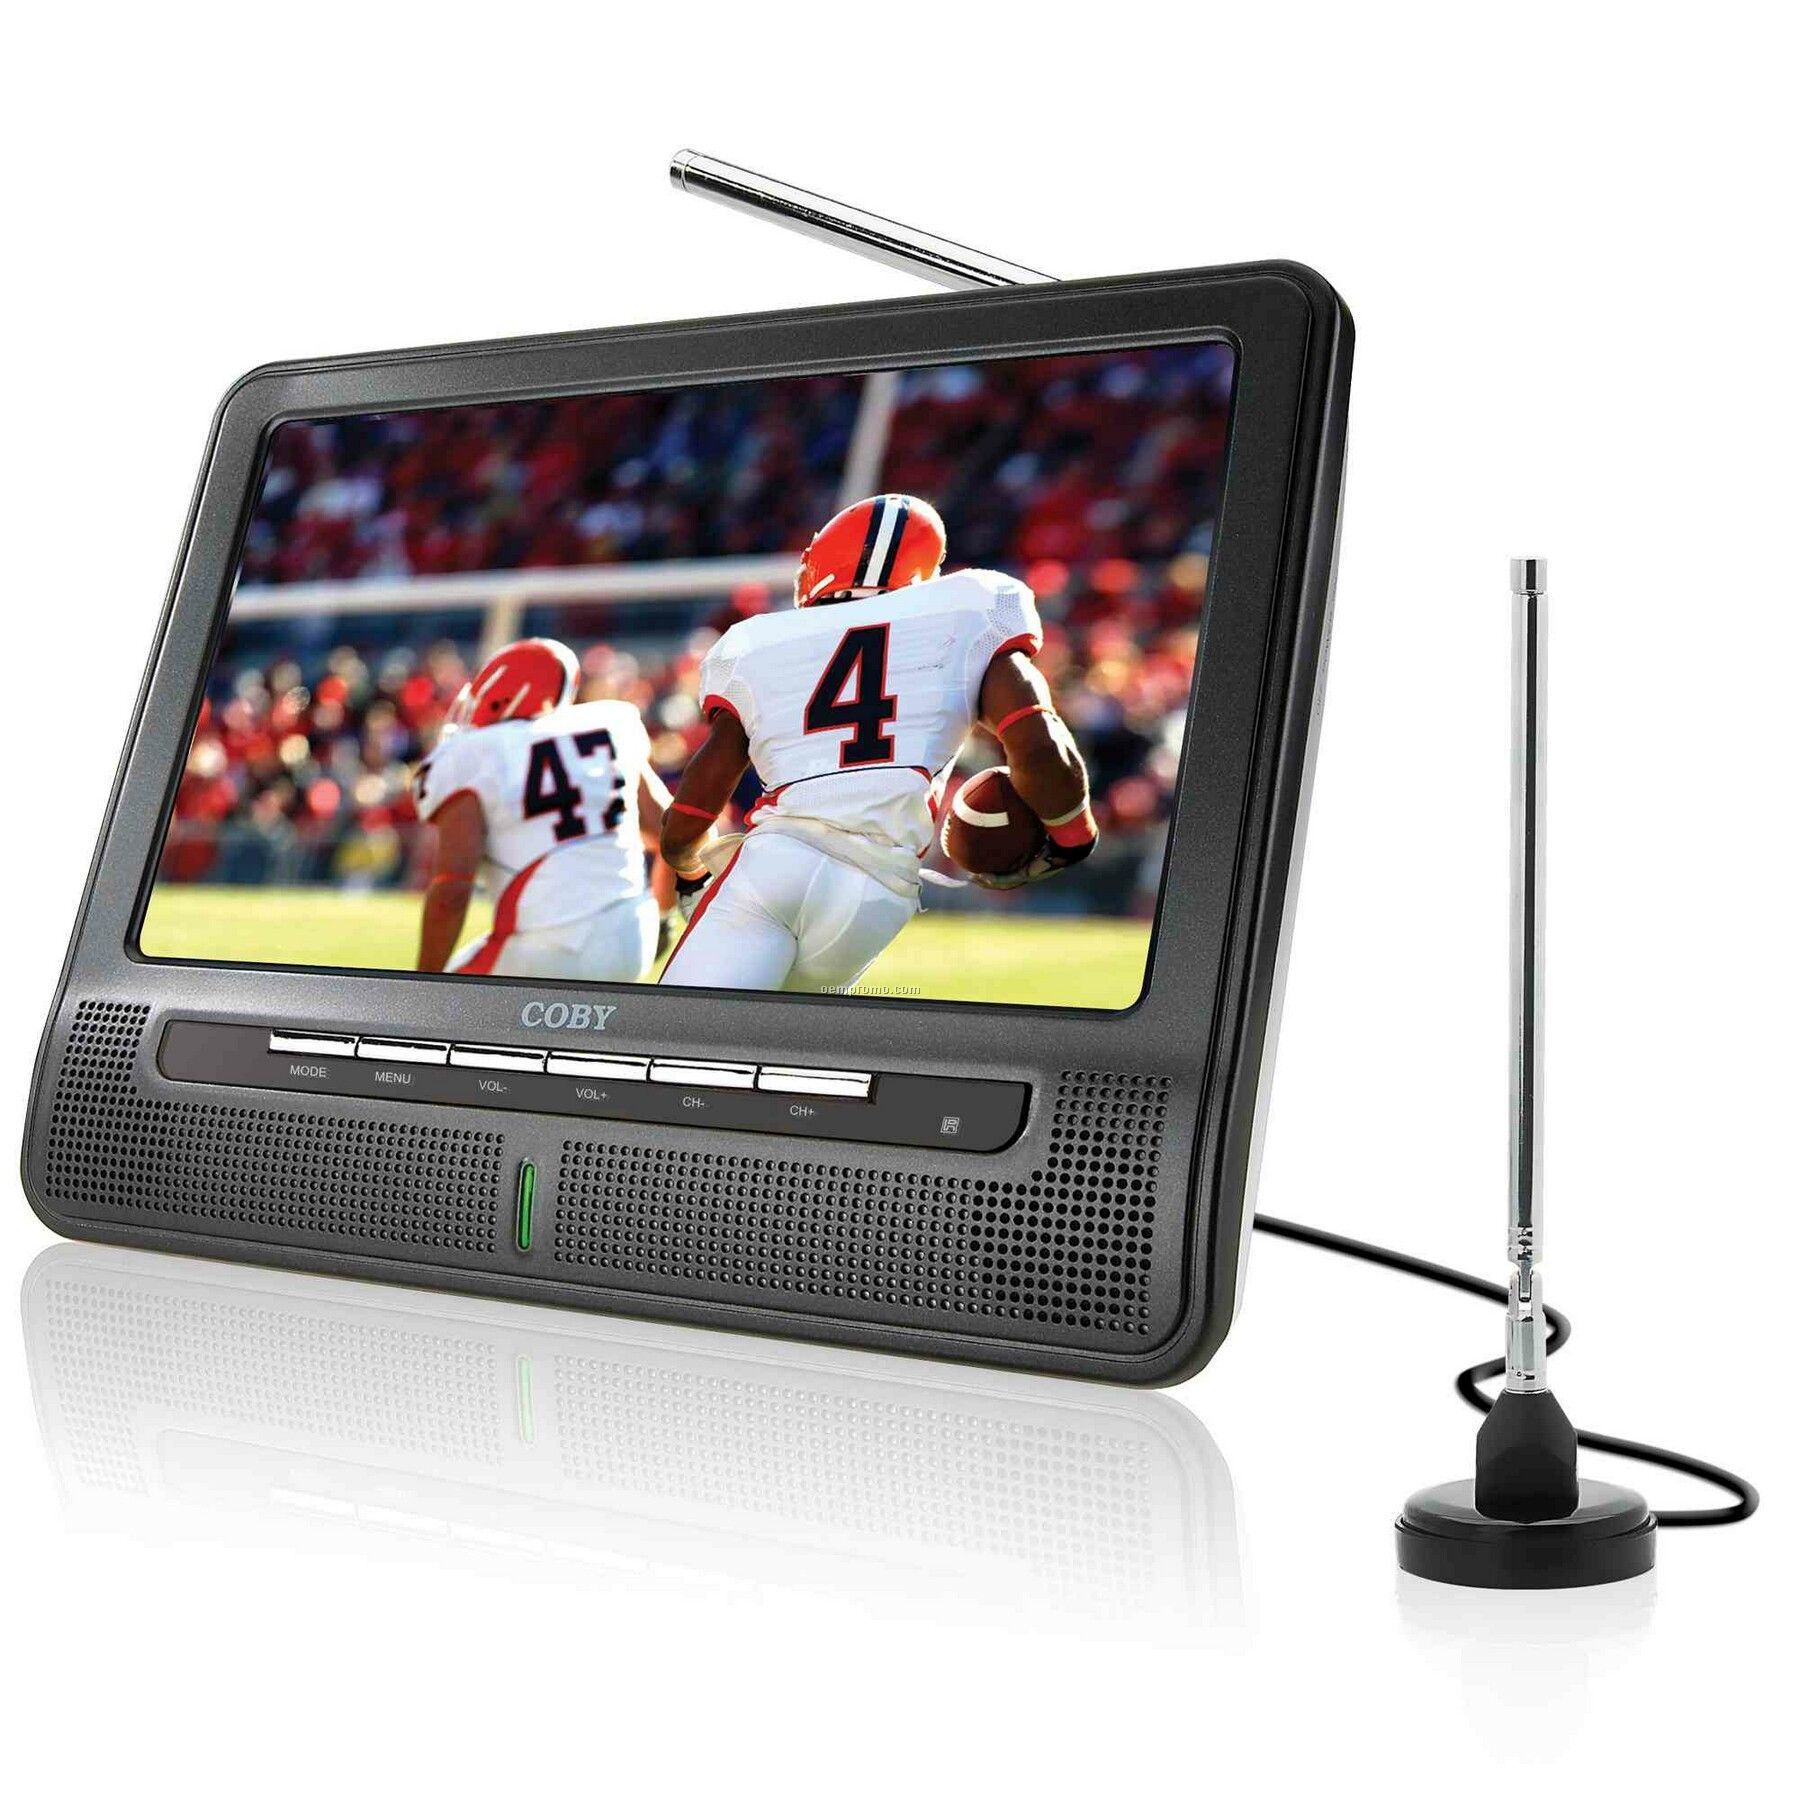 mibook 7 portable digital video player mp3